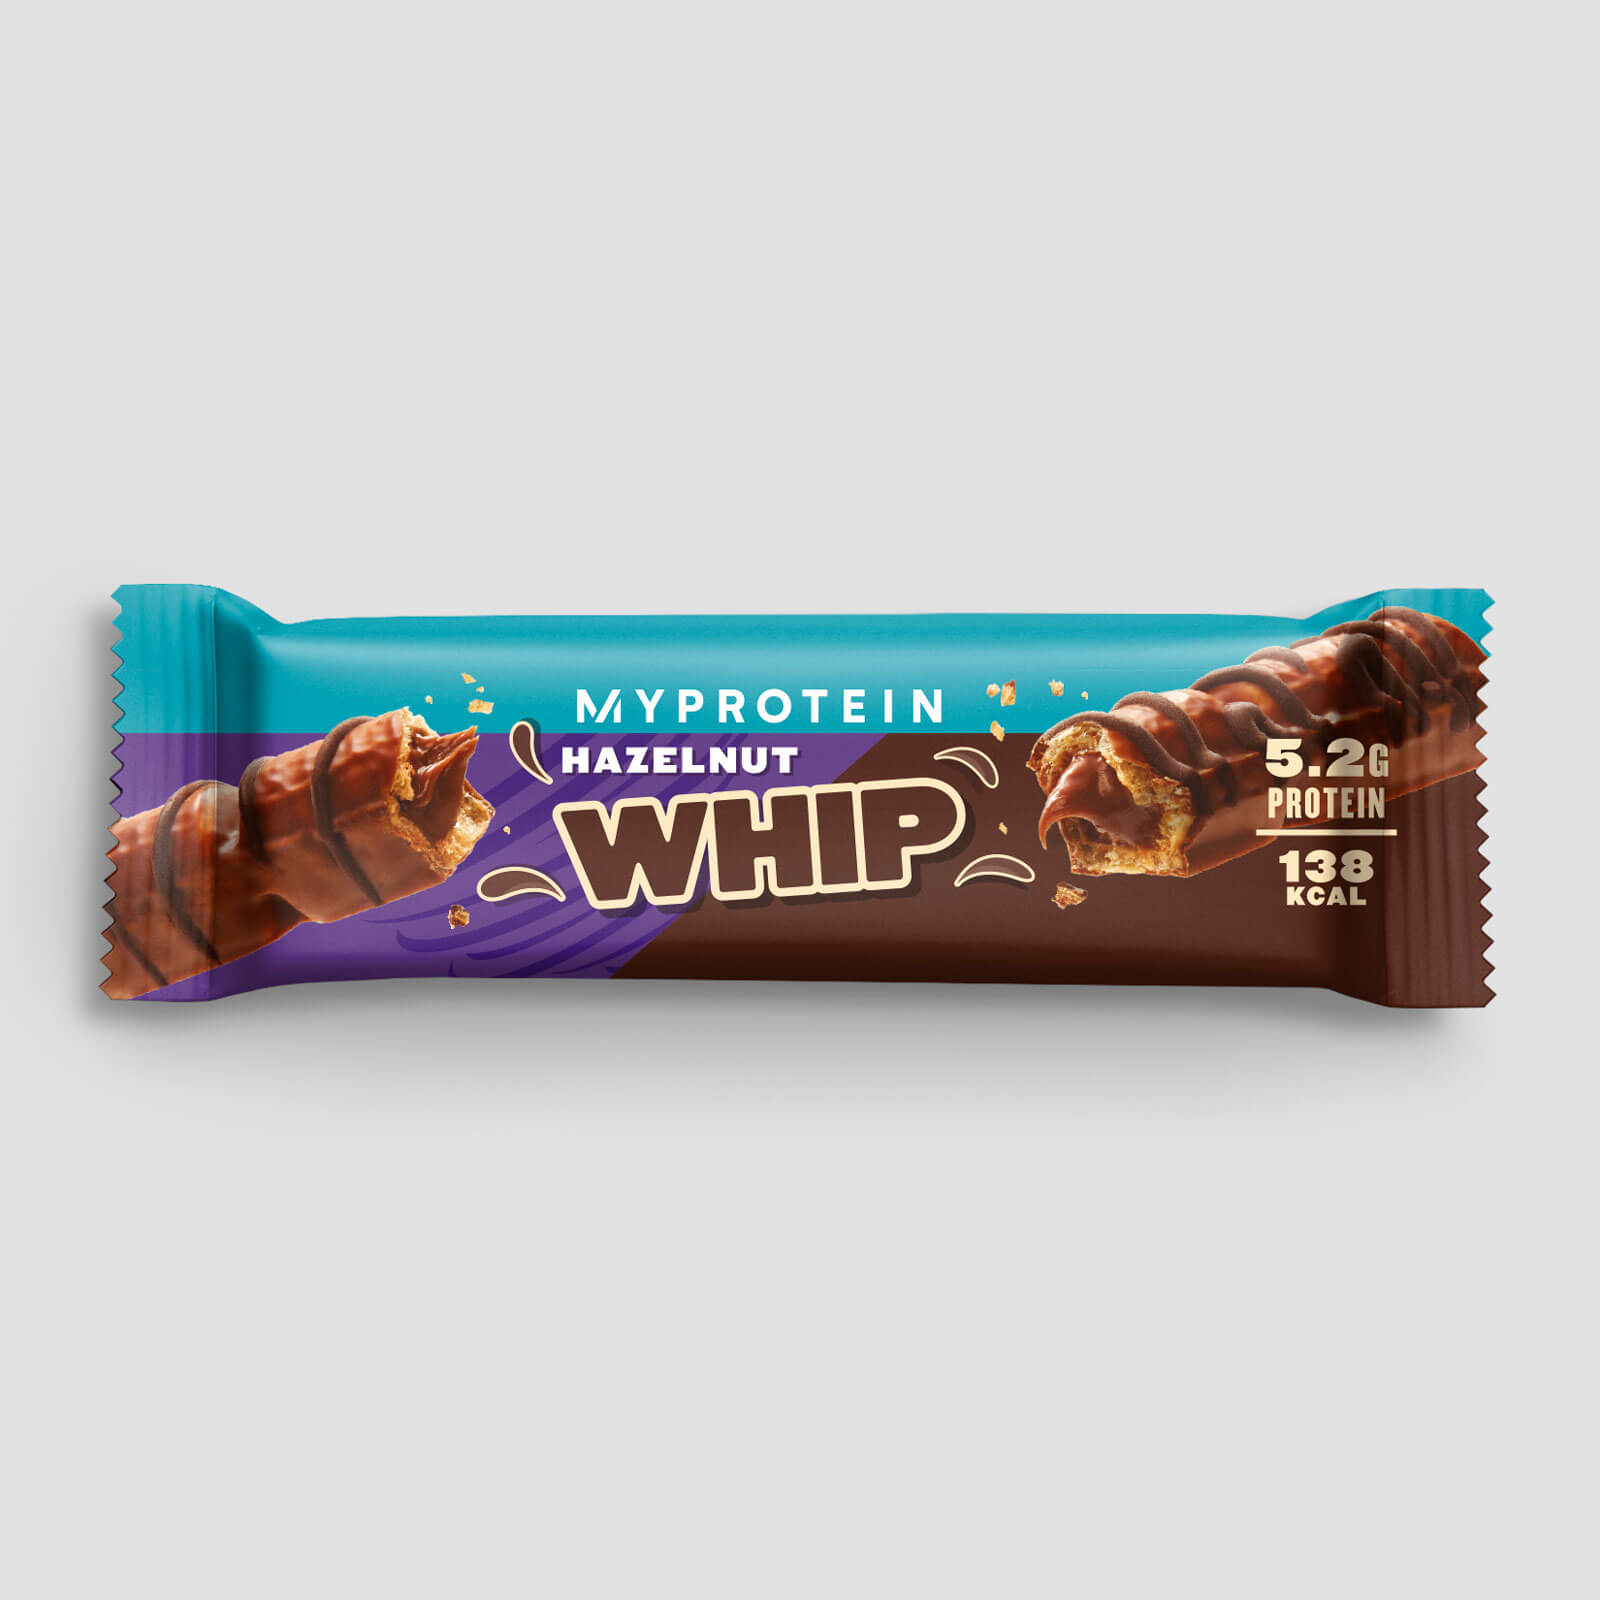 Myprotein Hazelnut Whip (Sample) - 24g - Mliječna čokolada